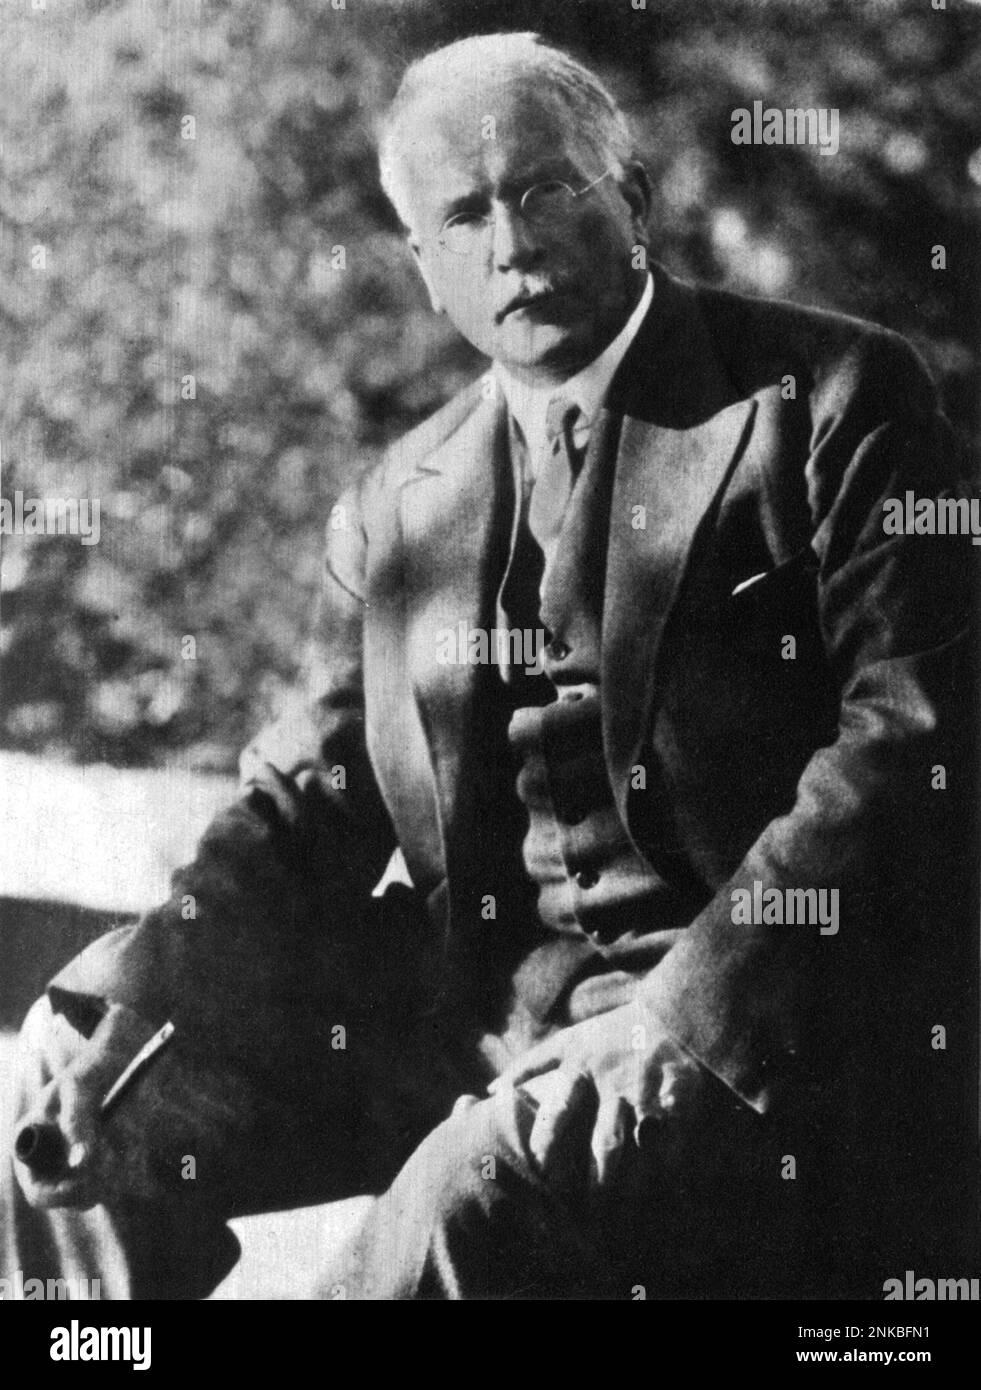 Carl Gustav JUNG ( Kesswyl , Switzerland 1875 - Kusnacht 1961 ) , Swiss psychoanalyst - PSICANALISI - PSICOANALISI - PSYCHOANALYSE - PSICANALISTA - PSICOANALISTA - SIGMUND FREUD  - portrait - ritratto - occhiali - glasses - cravatta - tie - capelli bianchi - white hair ----  Archivio GBB Stock Photo